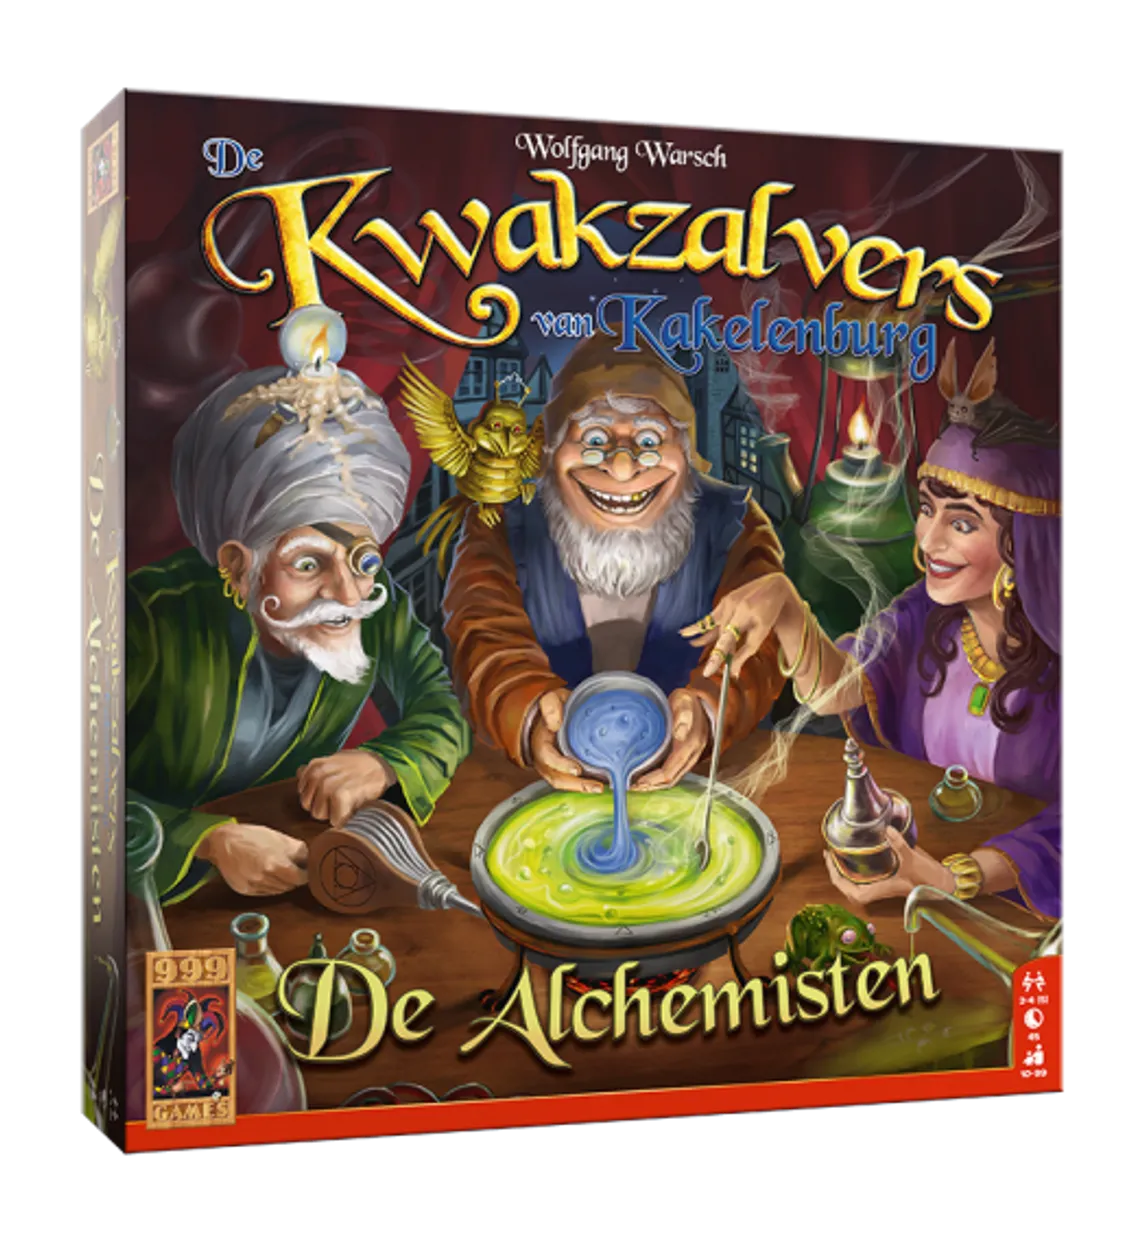 De Kwakzalvers: Alchemisten uitbreiding